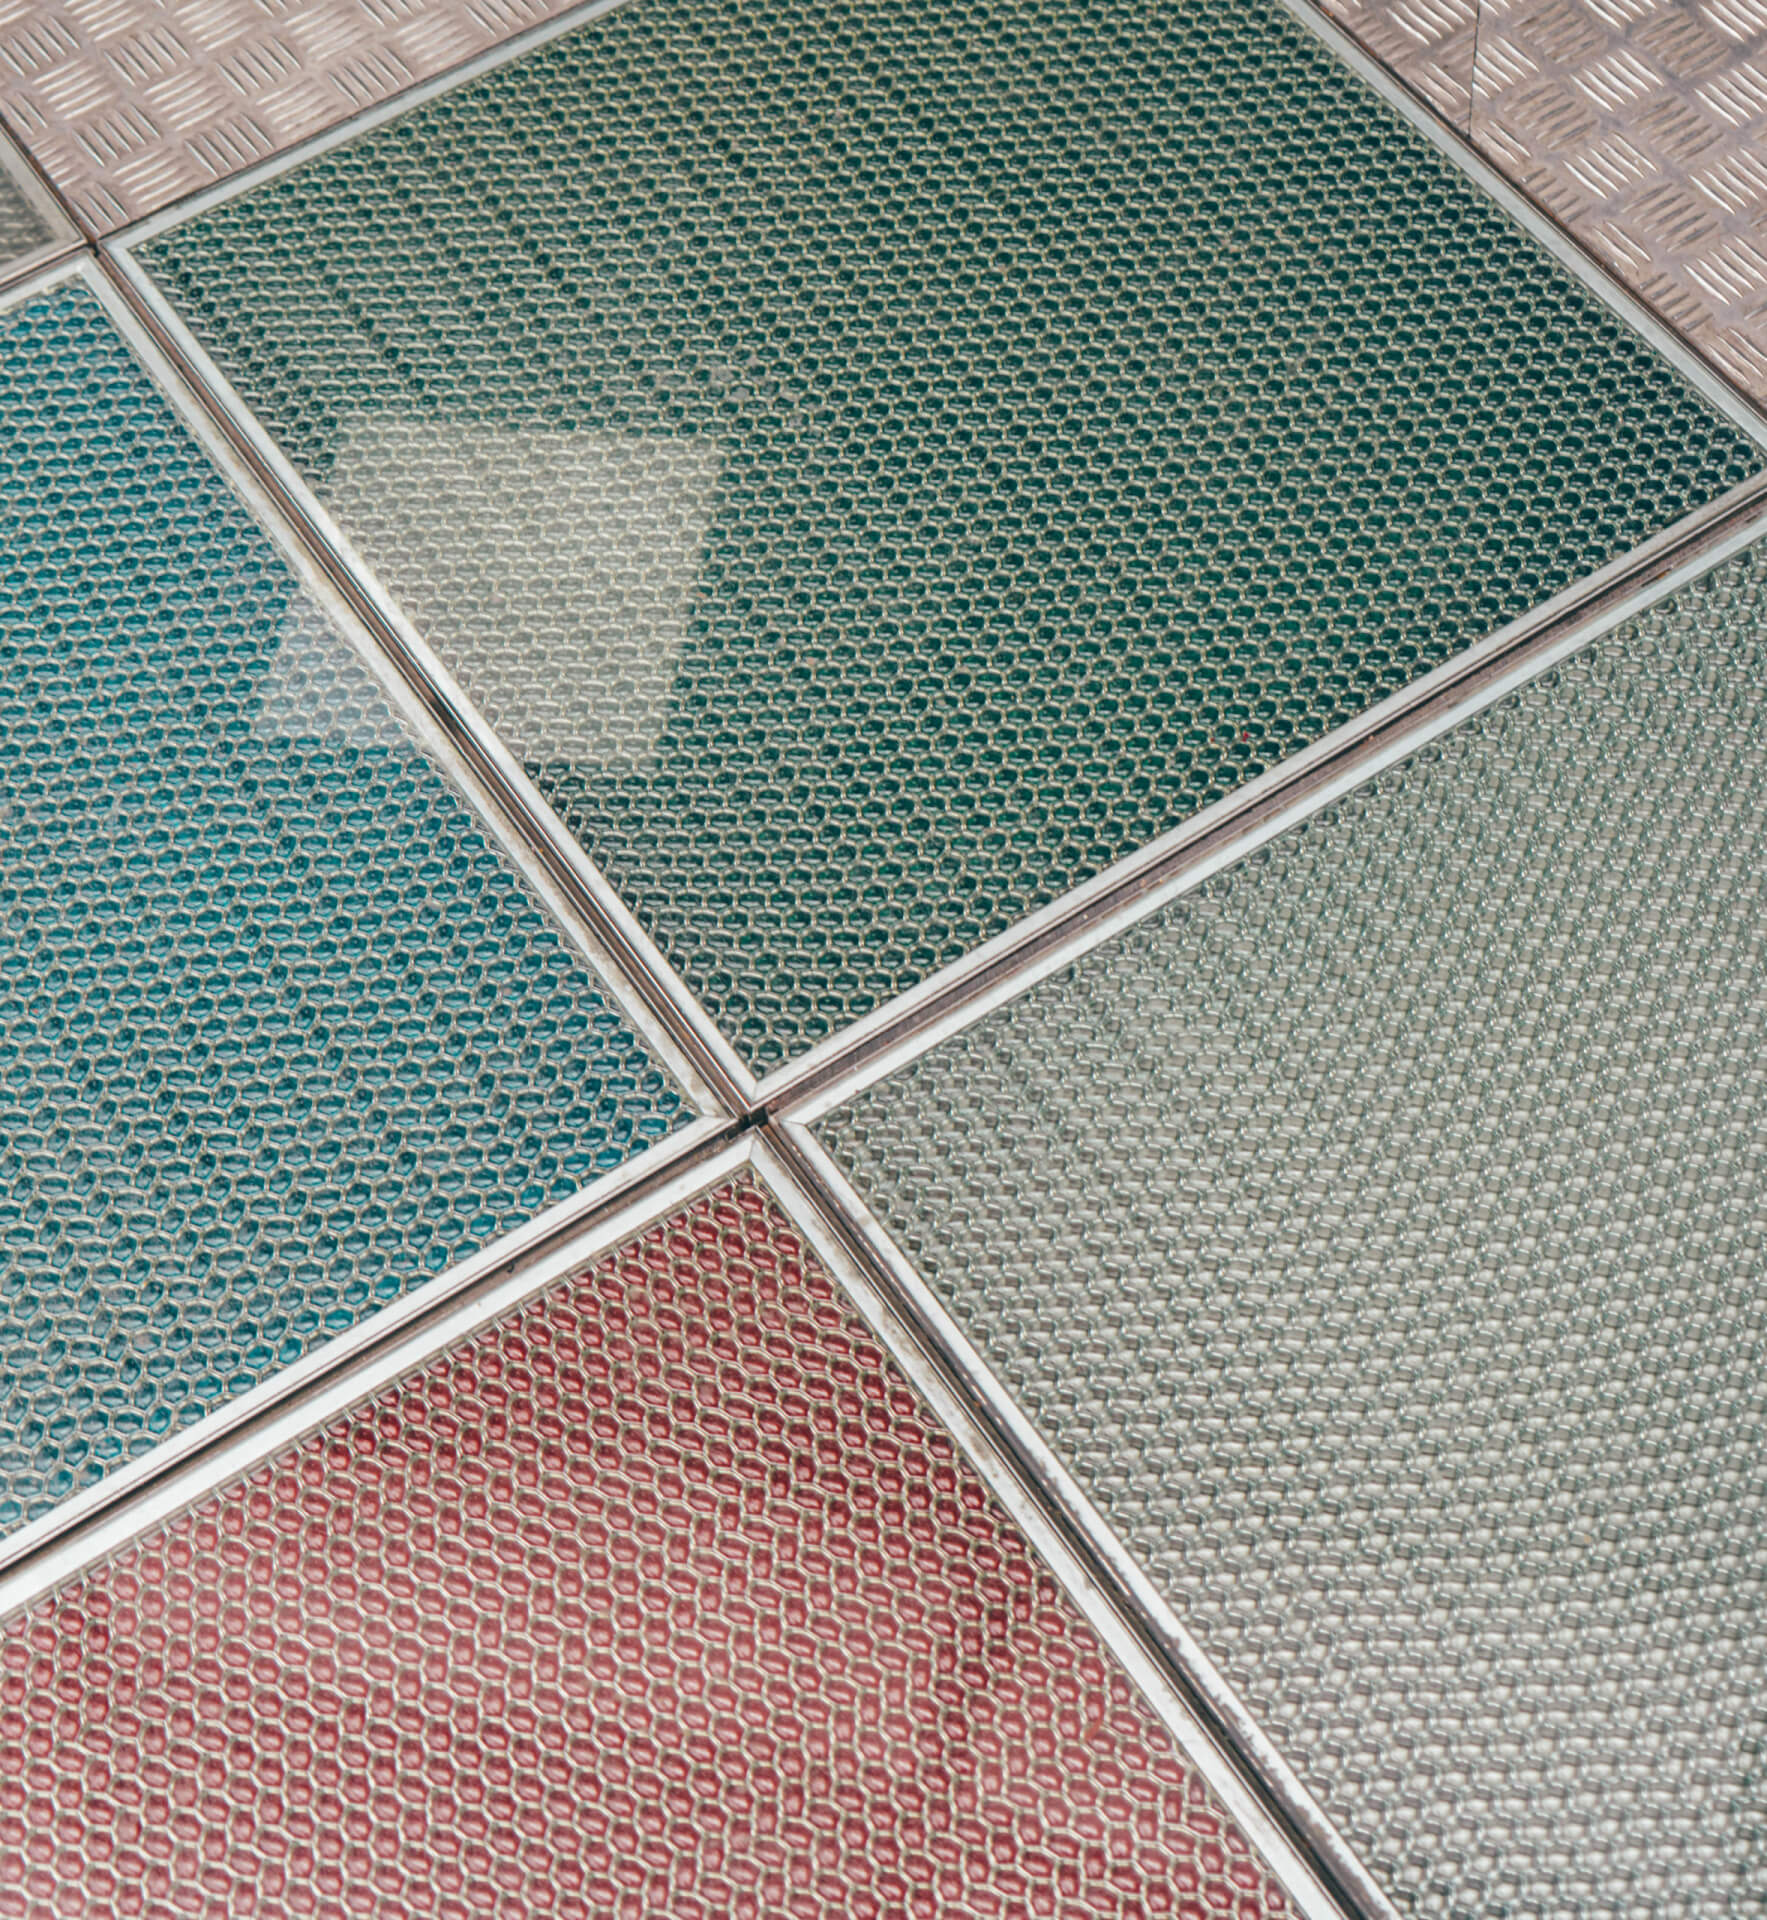 Translucent flooring panels by Mykon